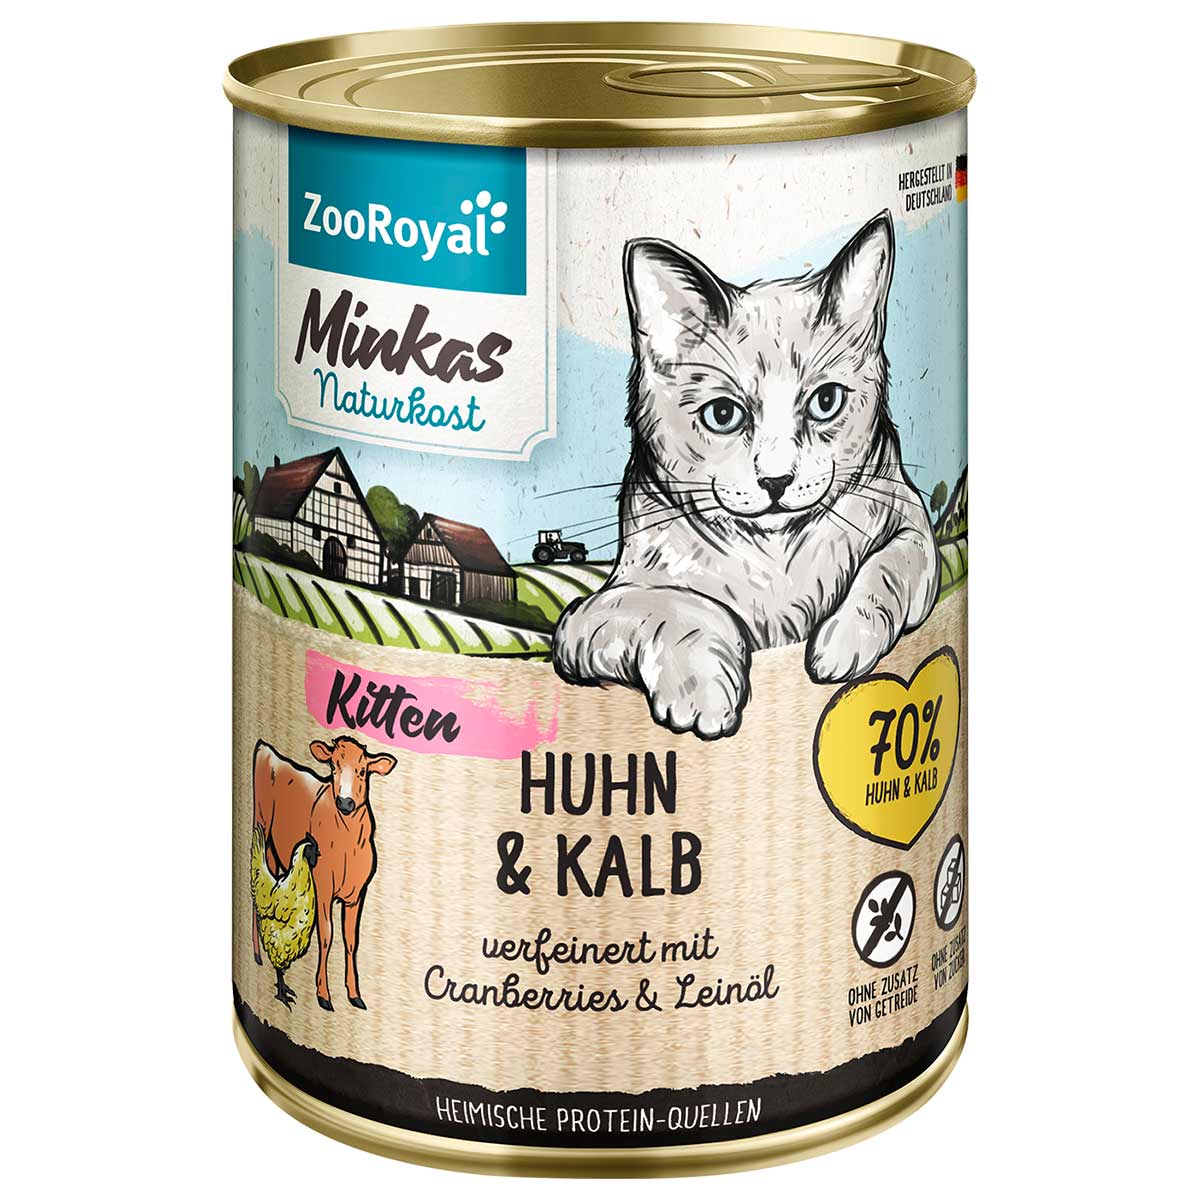 ZooRoyal Minkas Kitten Huhn und Kalb 6x400g von ZooRoyal Minkas Naturkost